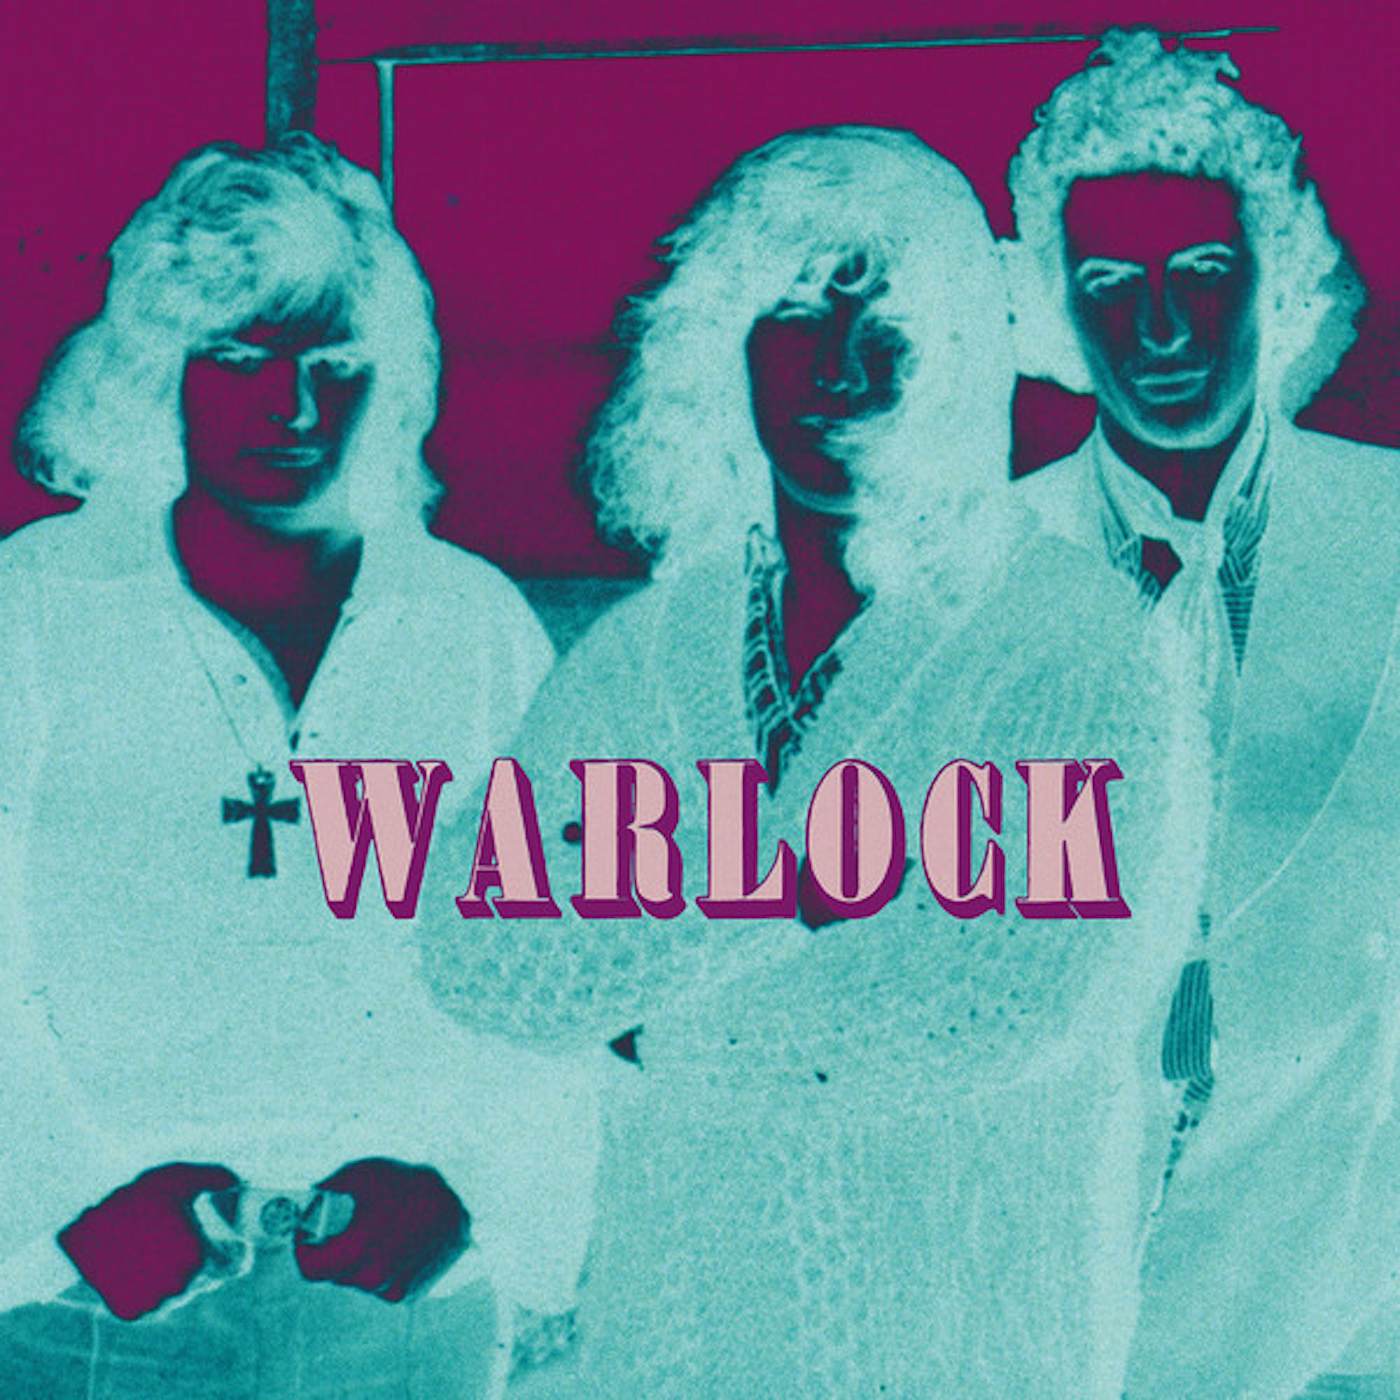 Warlock 40 ANOS ANTES Vinyl Record